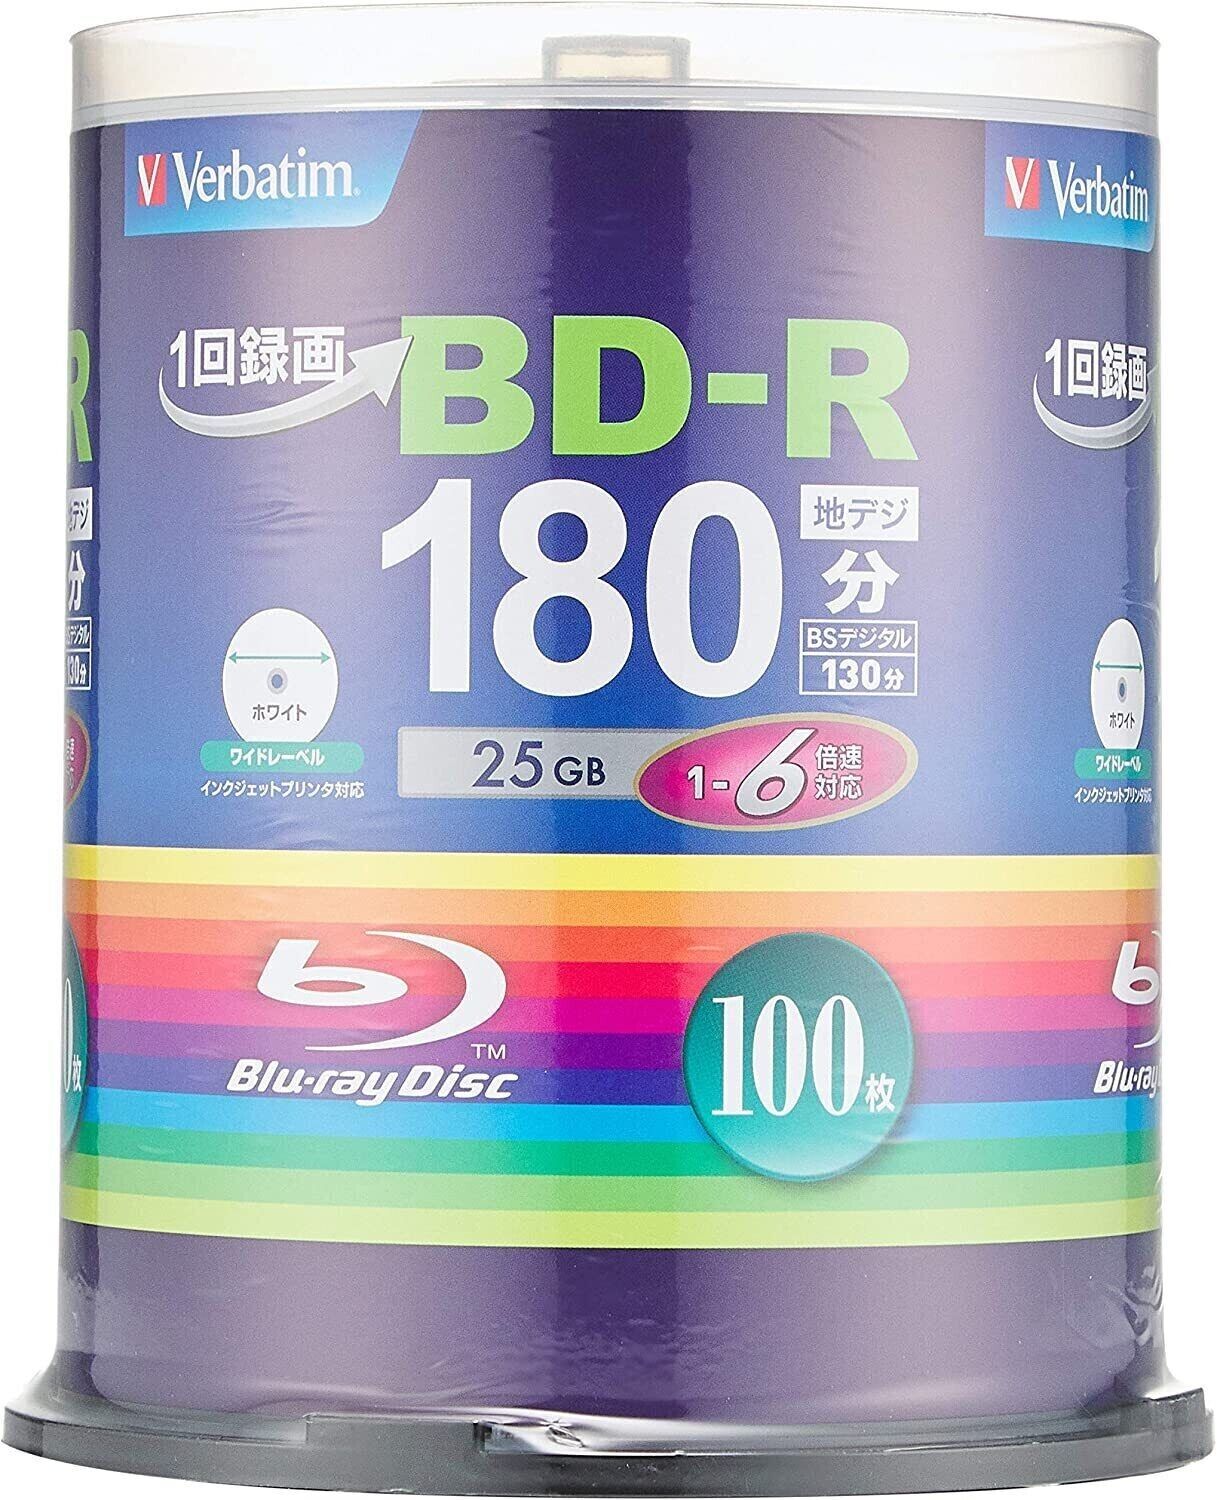 Verbatim Blu-ray Disc for 1-time recording BD-R 25GB 100 sheets white 100 sheets